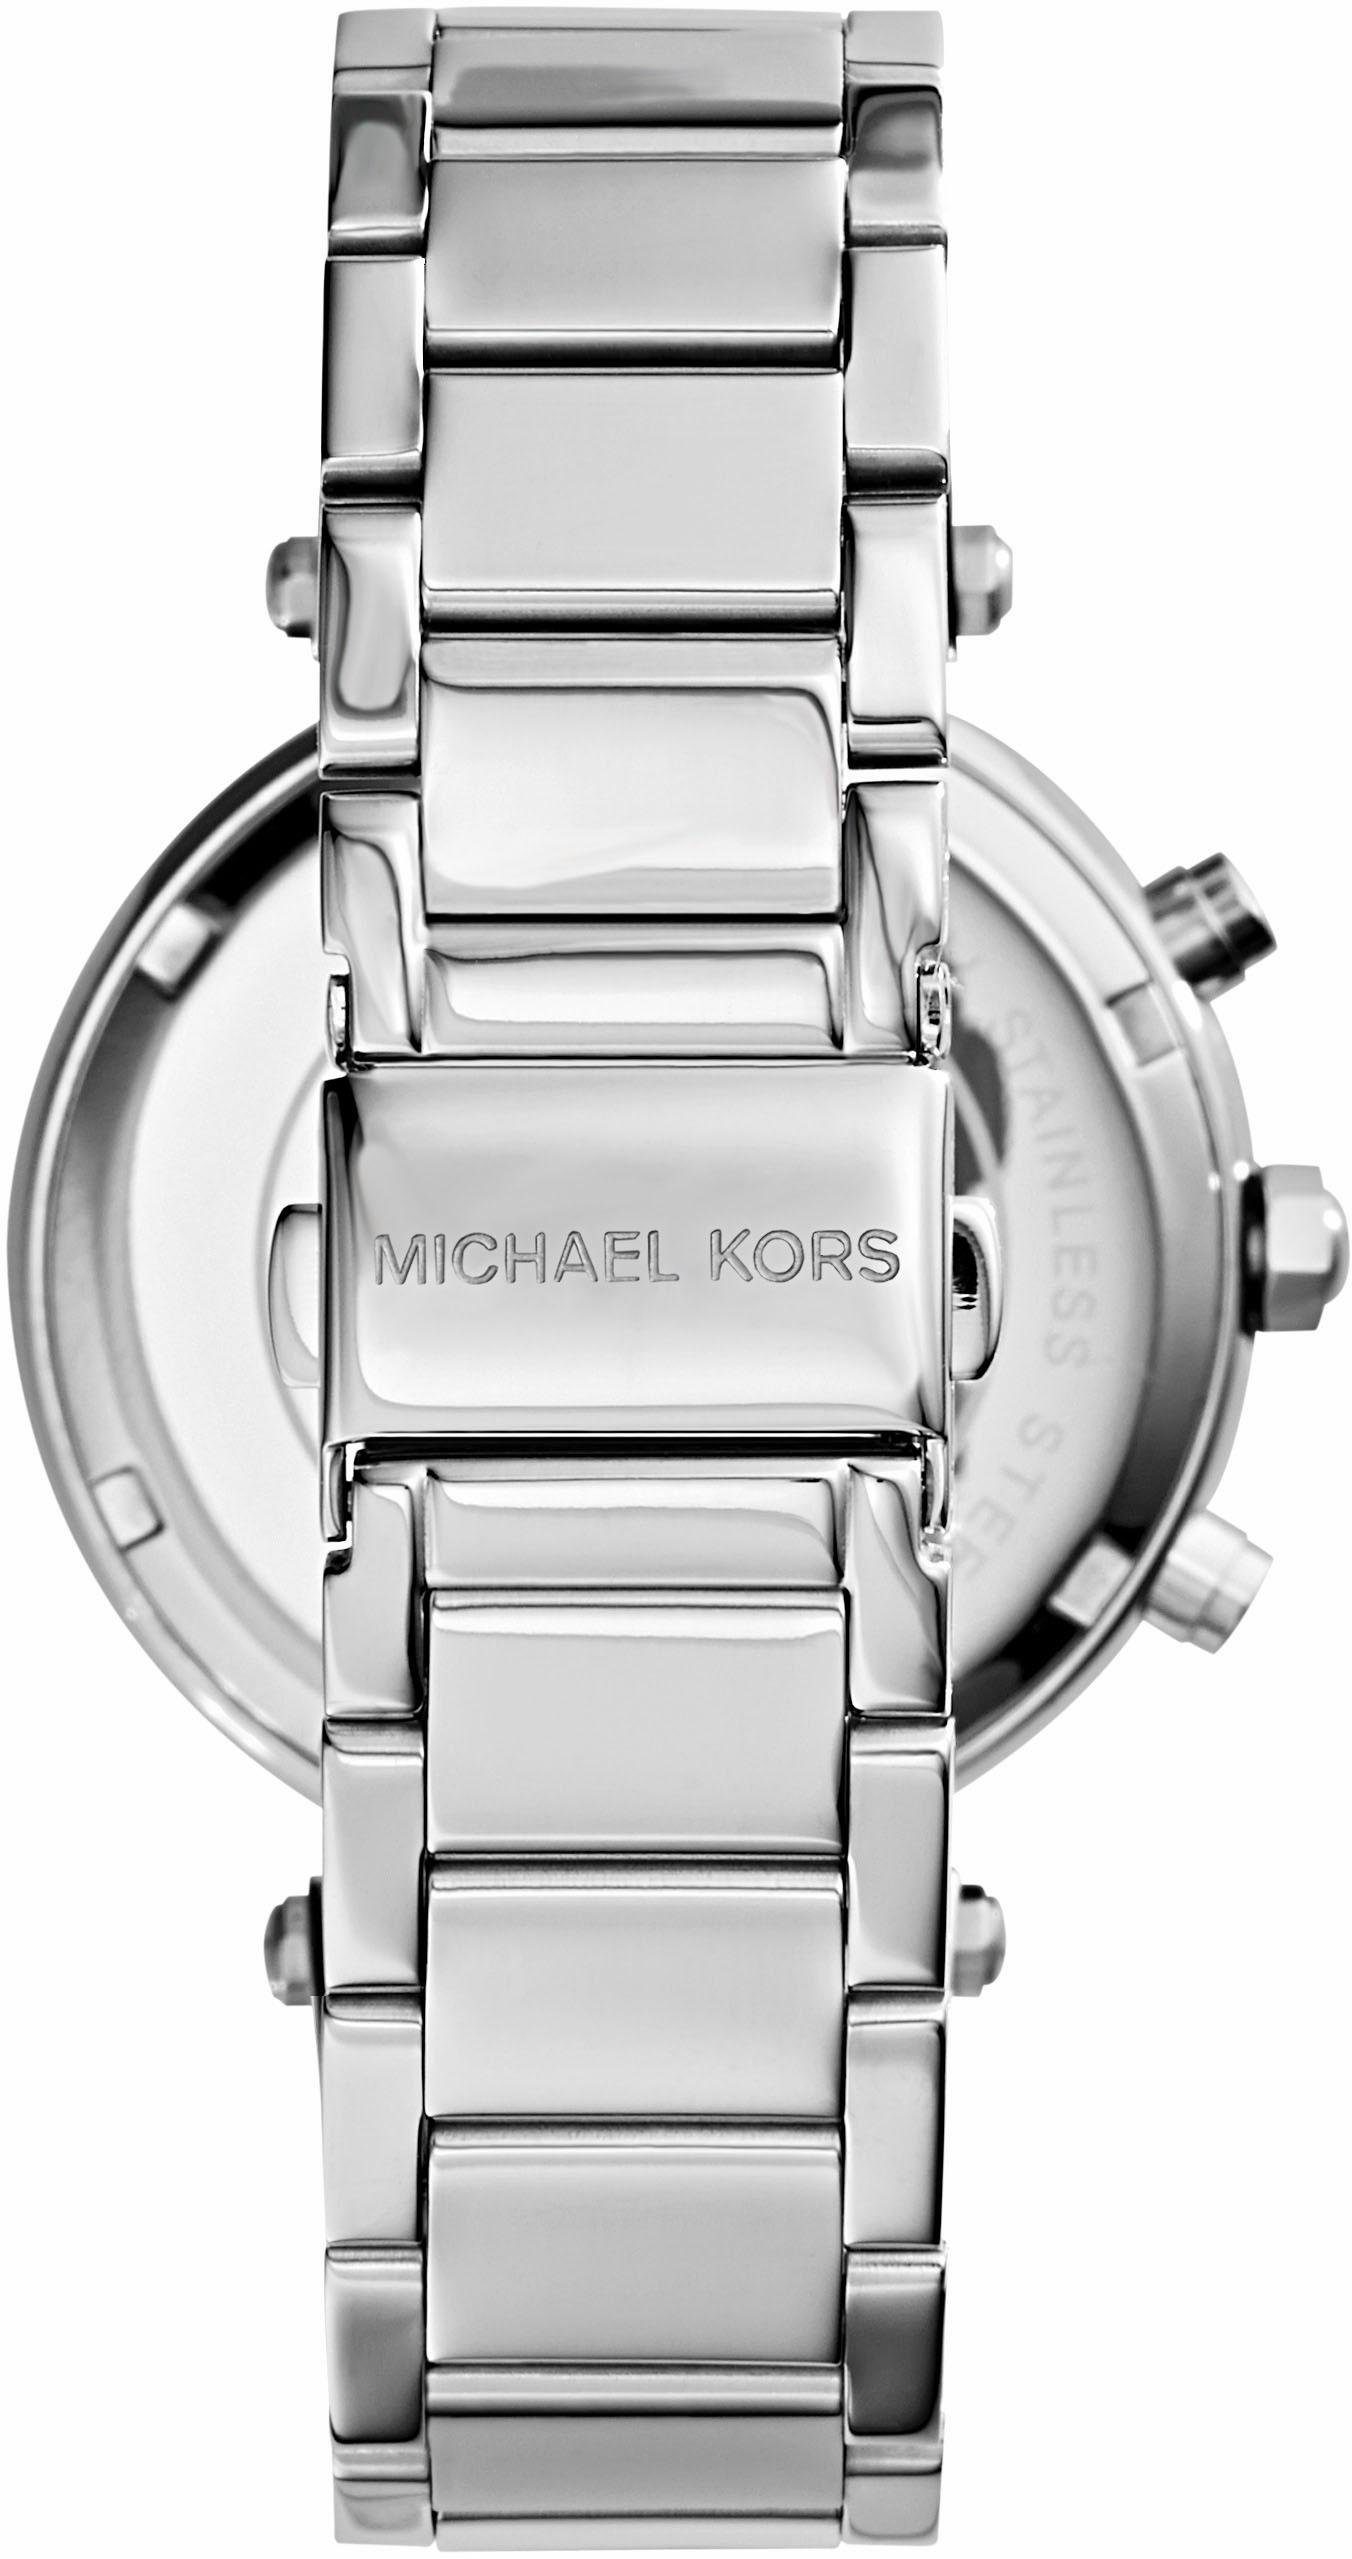 MK5353 PARKER, Chronograph MICHAEL KORS